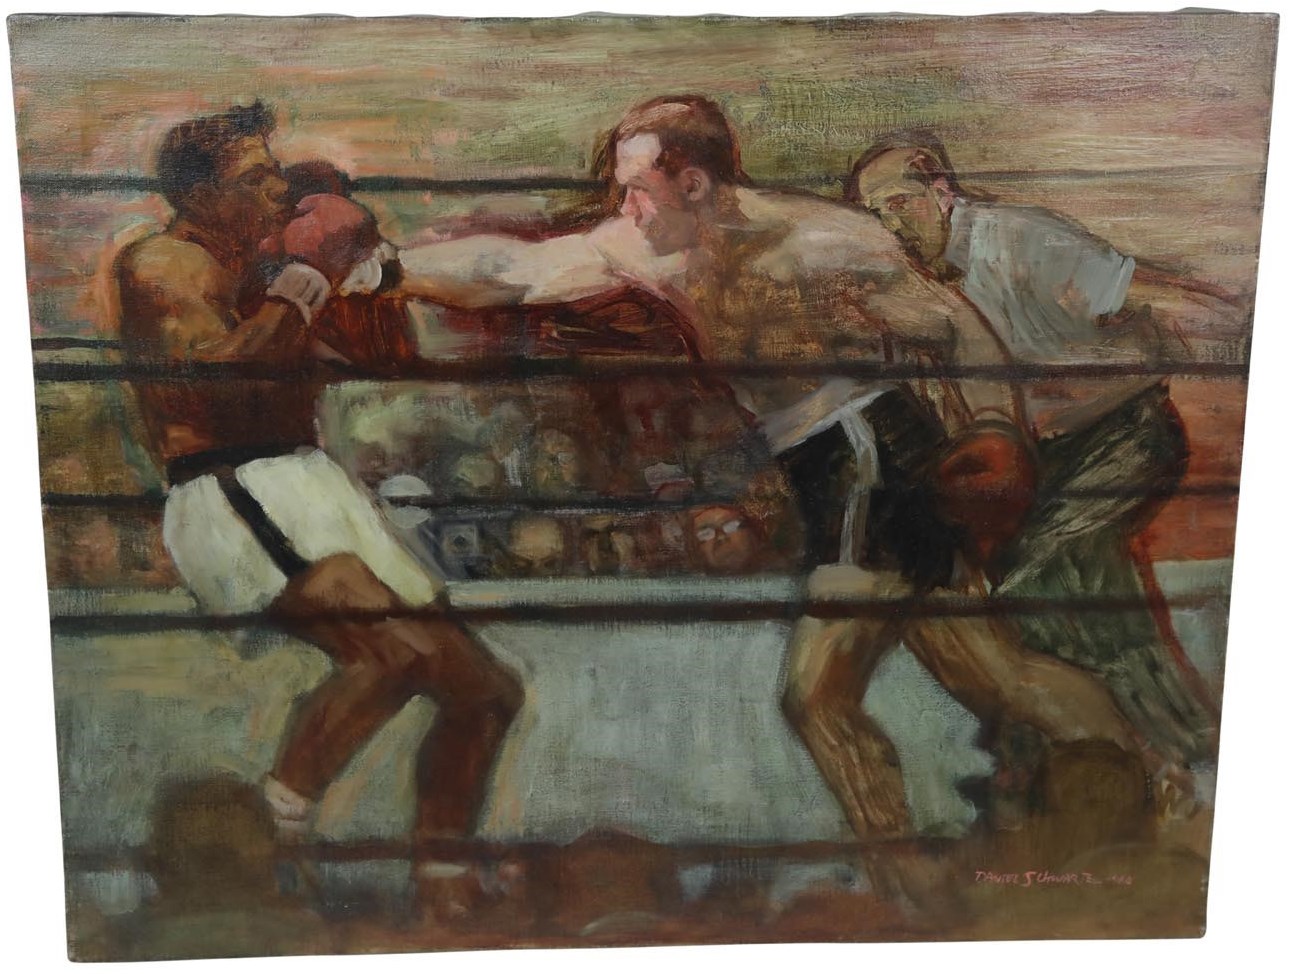 - 1959 "Ingemar Johansson Knocks out Floyd Patterson" Oil on Canvas by Daniel Schwartz - Featured in 1960 Esquire Magazine